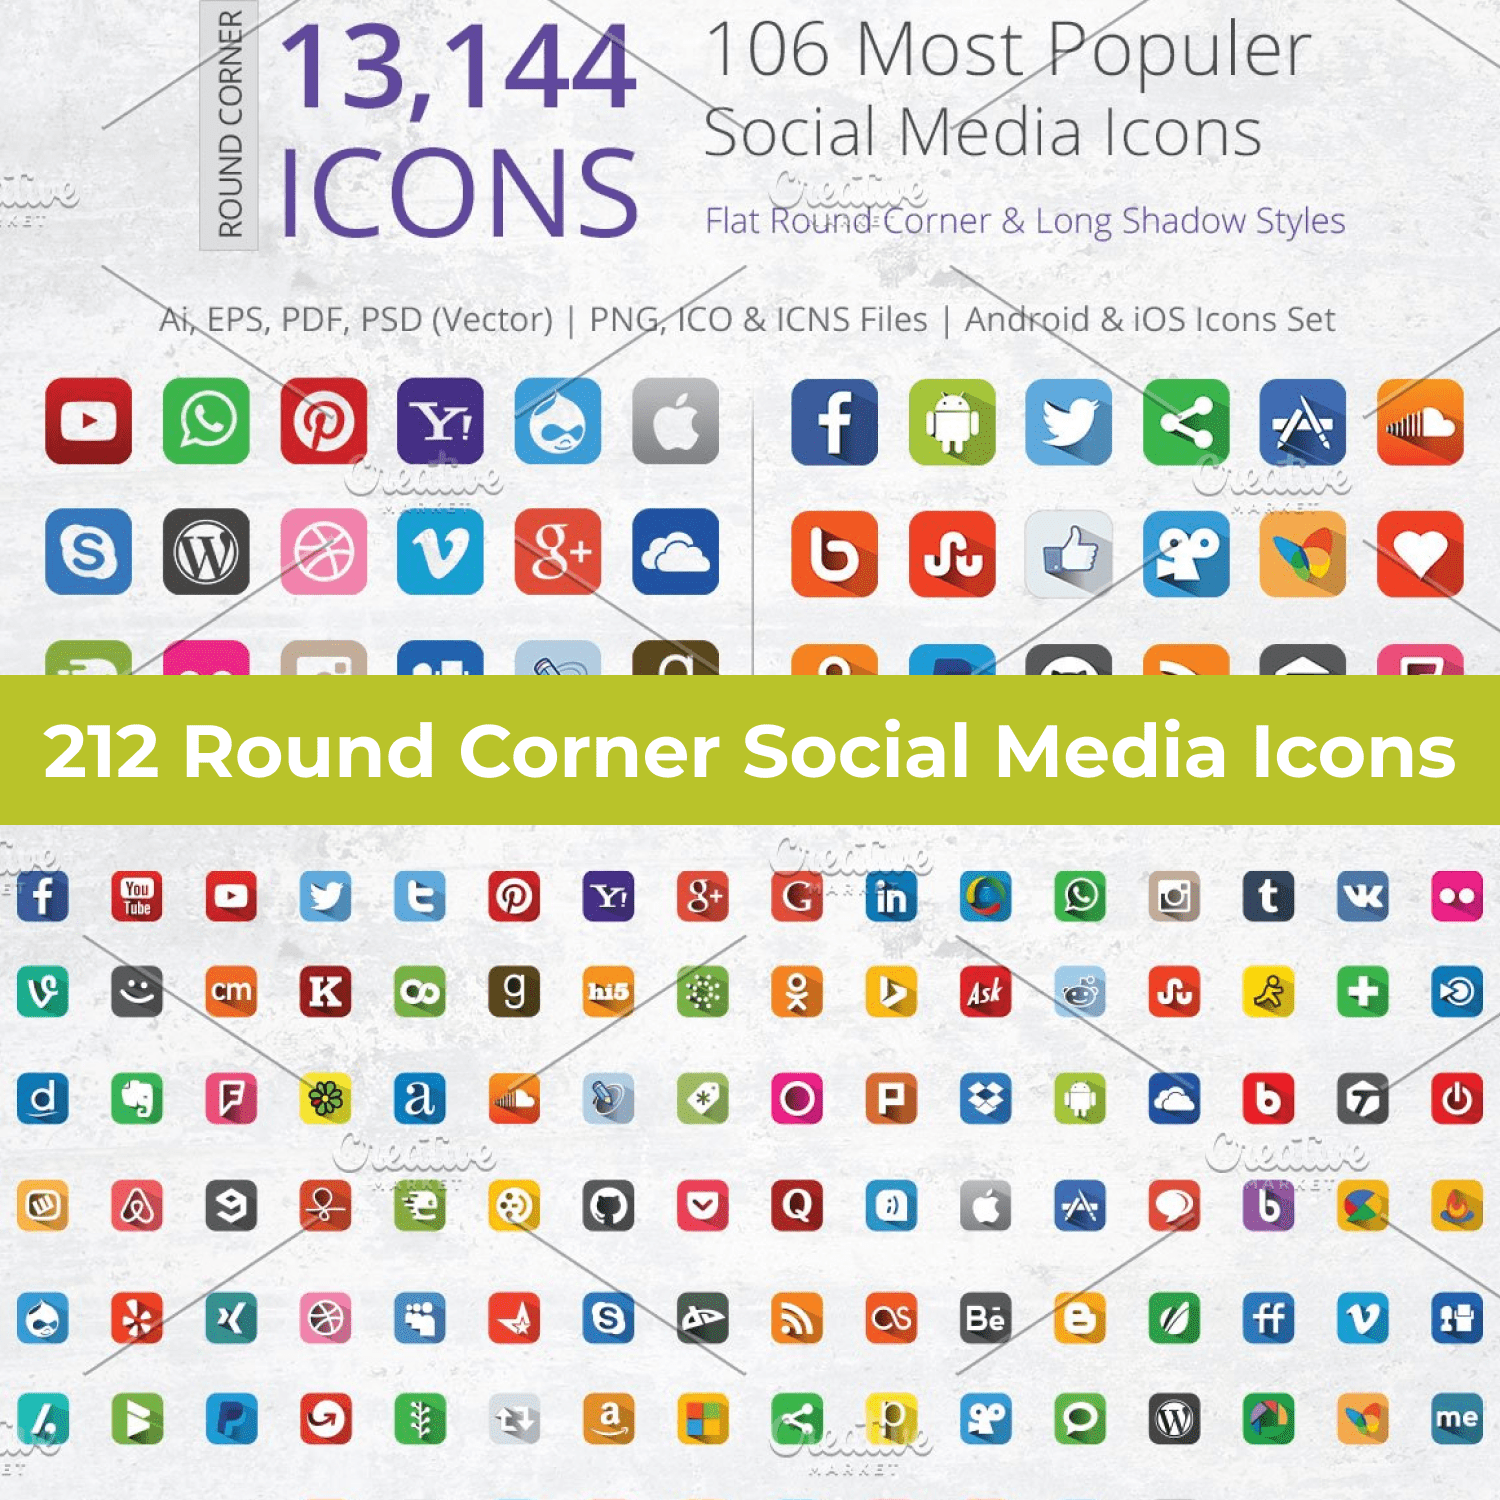 212 Round Corner Social Media Icons cover image.